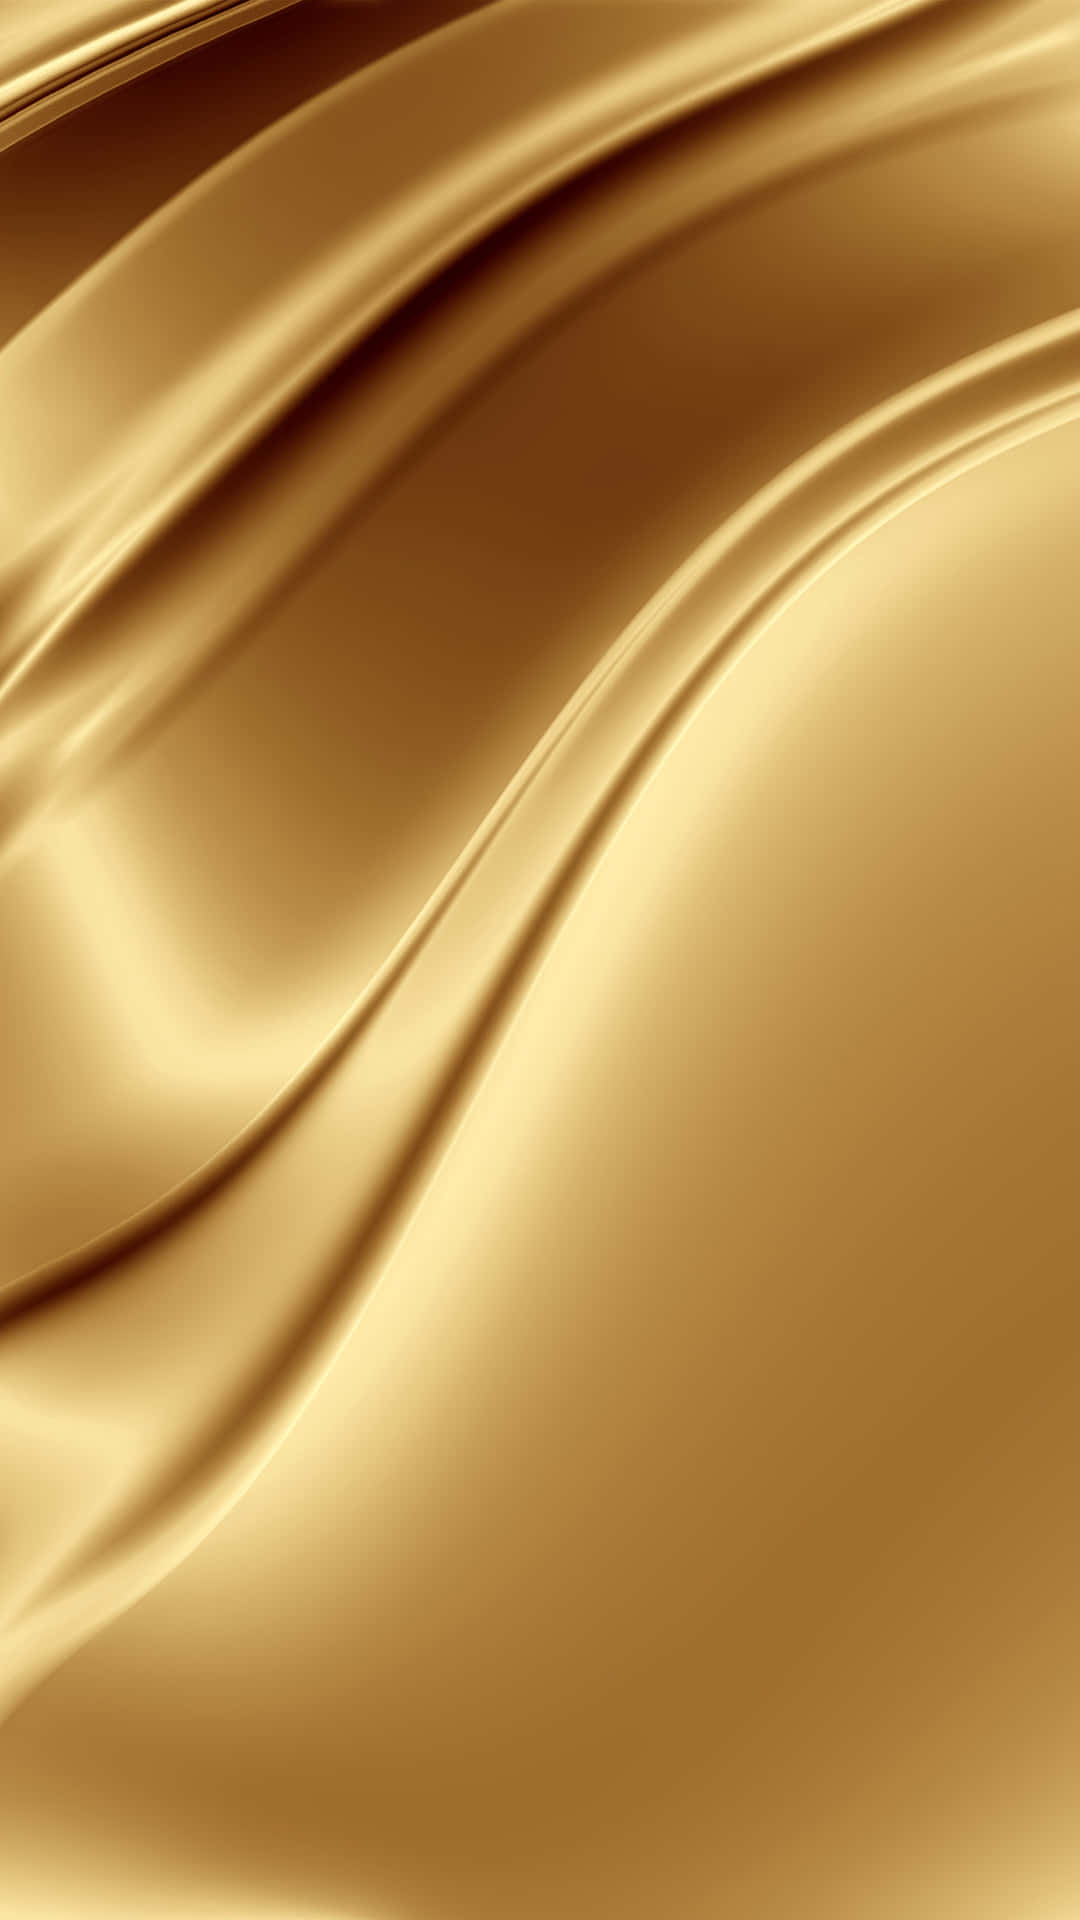 gold wallpaper hd iphone